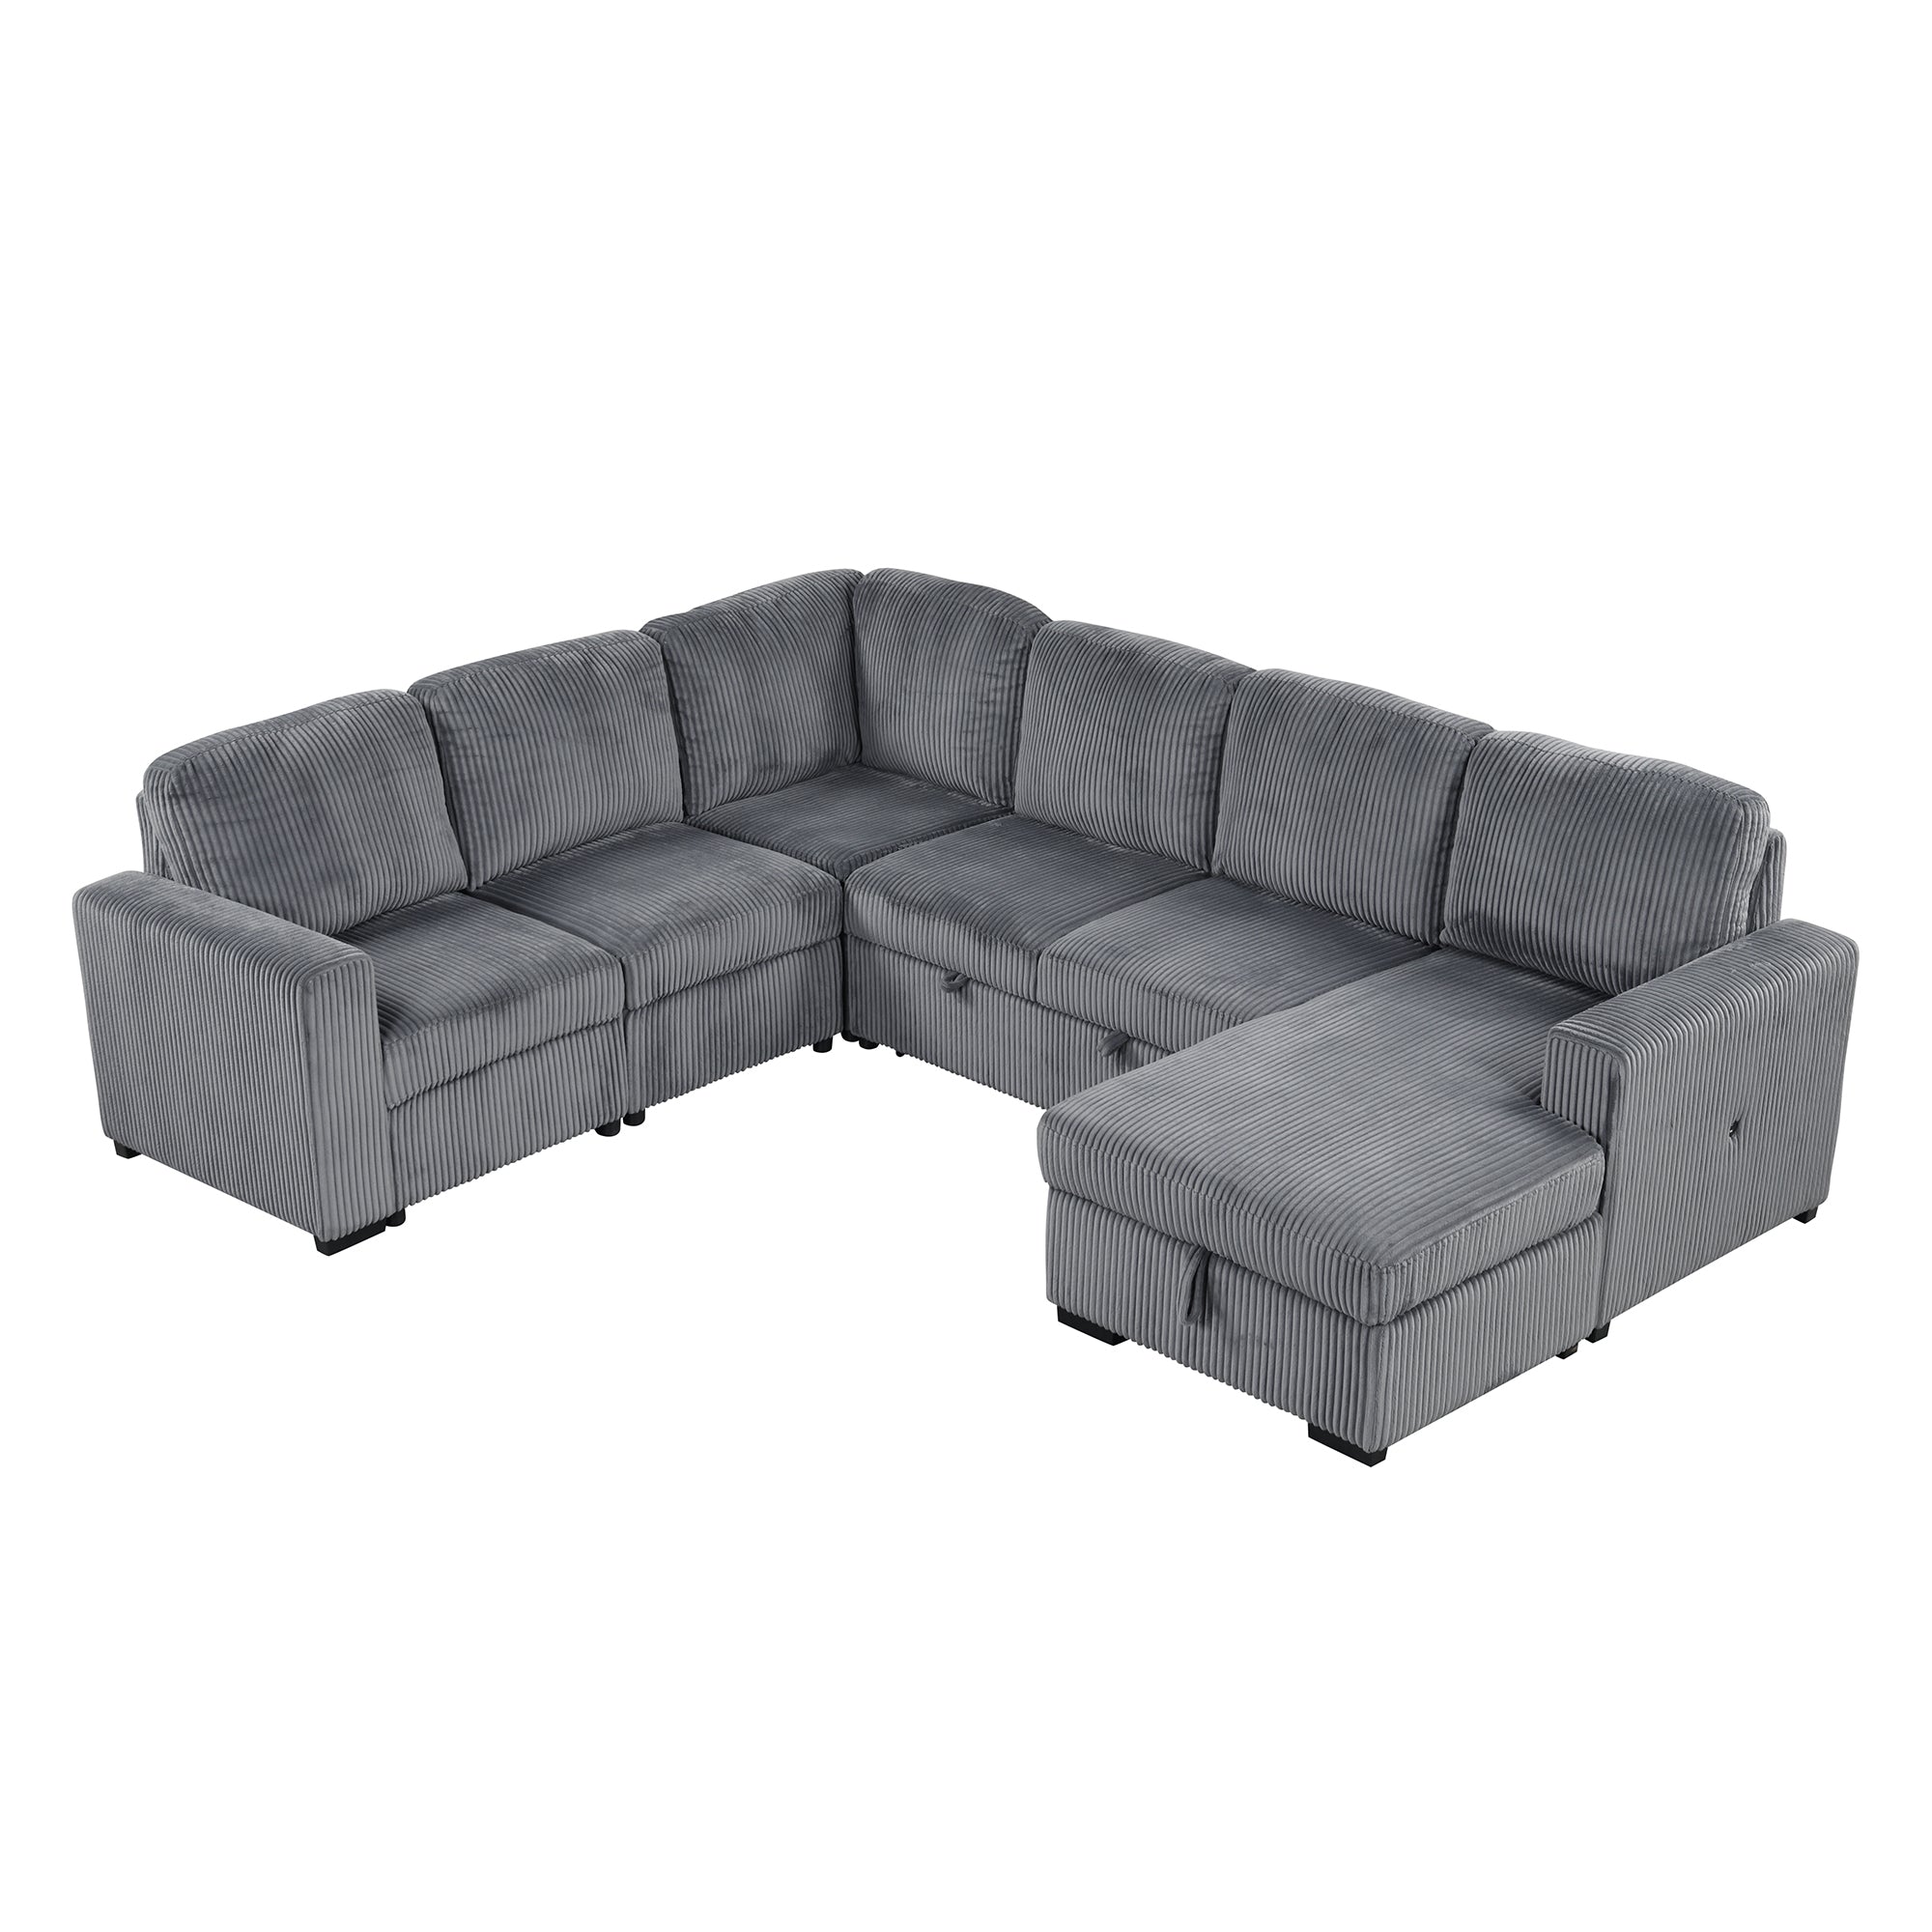 U-Shaped Corduroy Corner Sofa Sectional: Storage Lounge, Gray